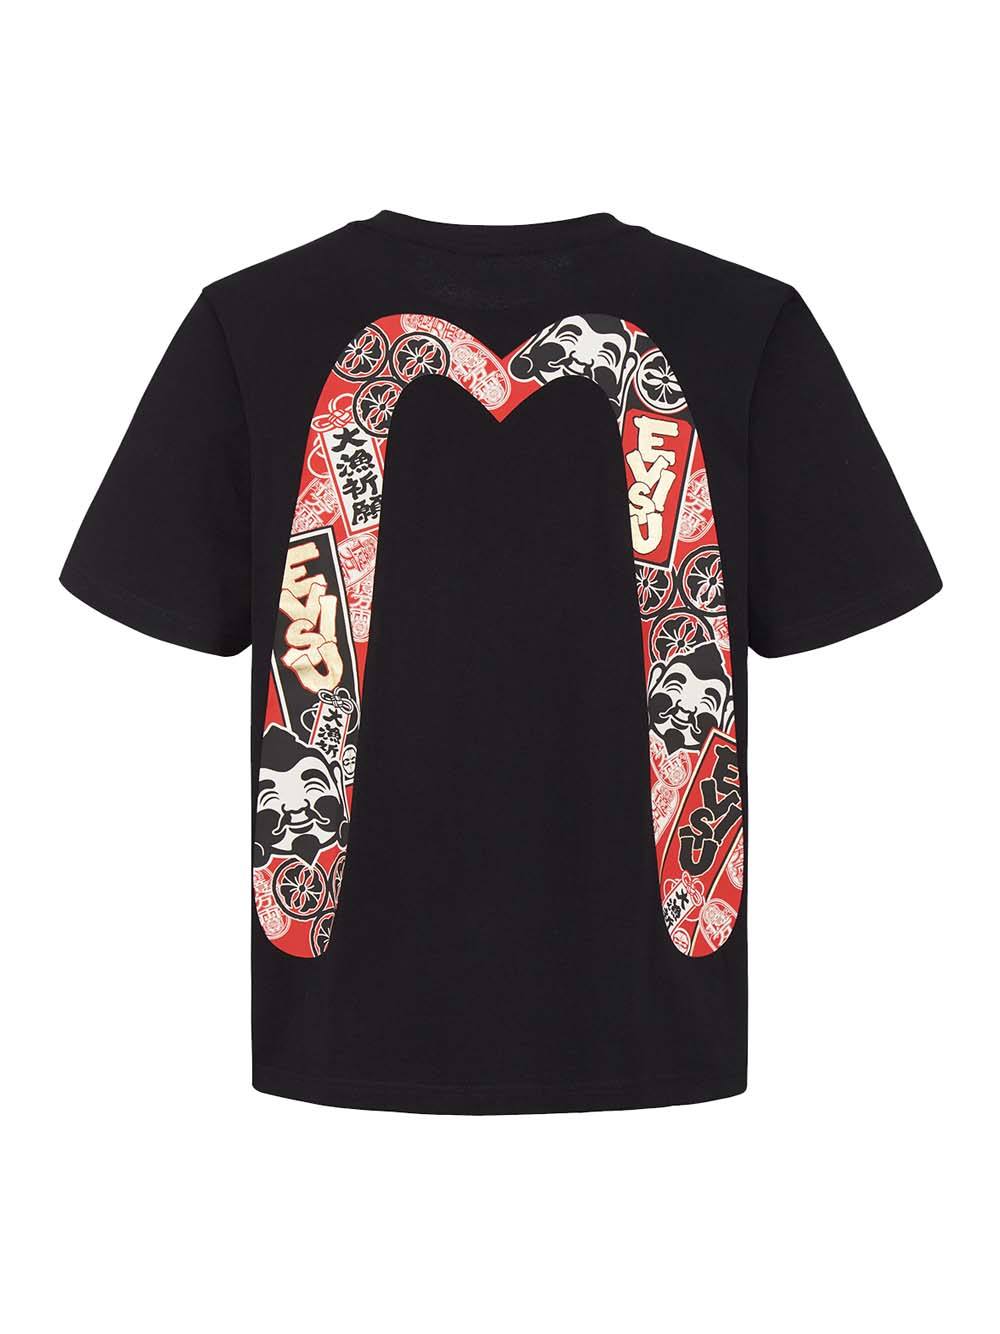 EVISU Godhead and Kamon Print T-Shirt Black - MAISONDEFASHION.COM